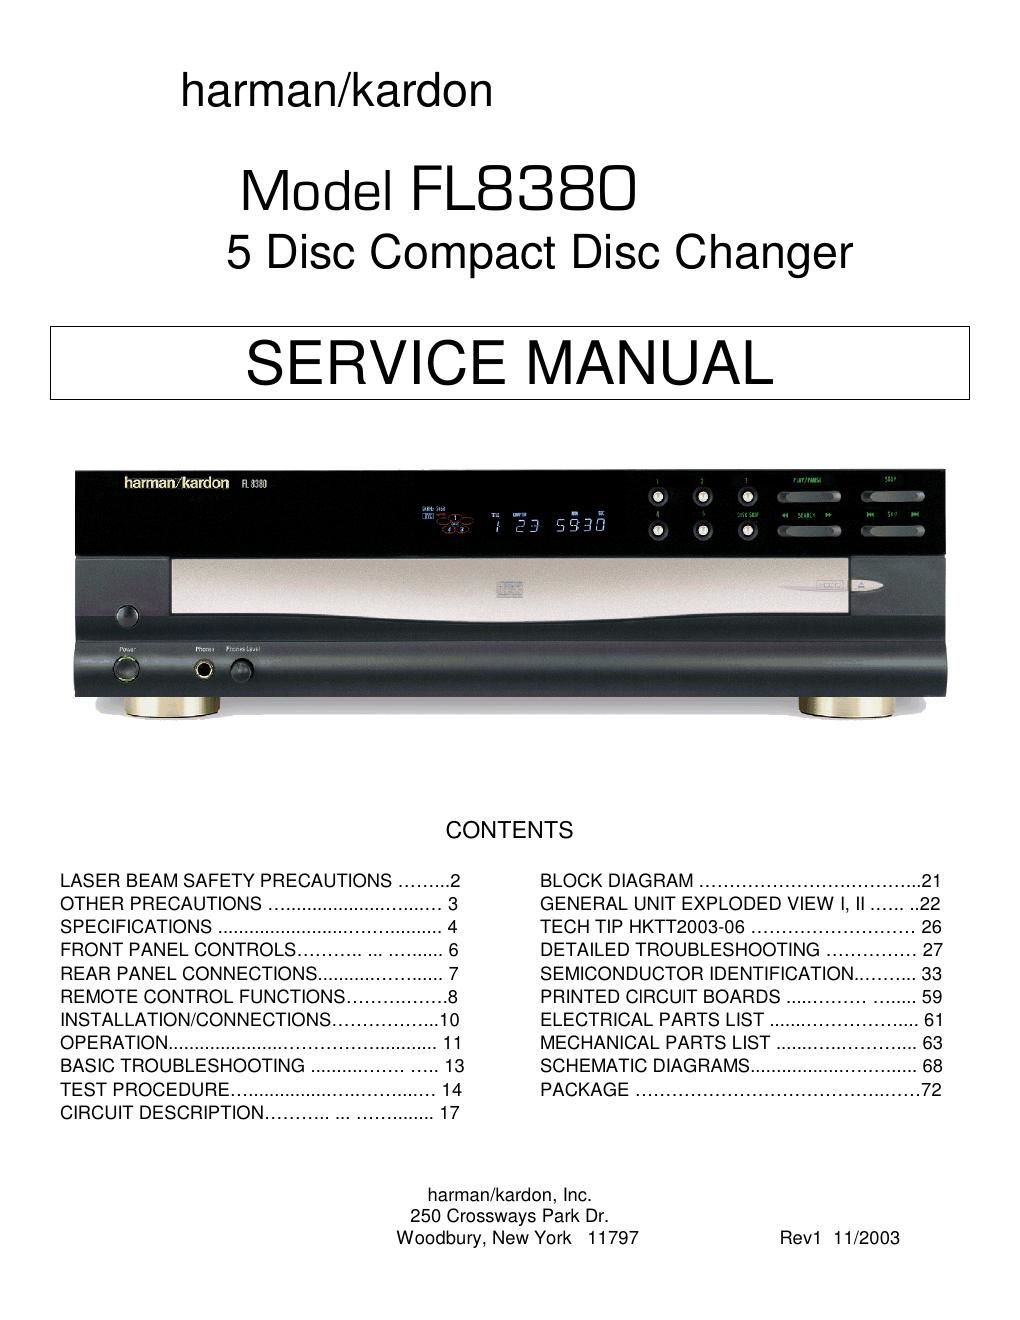 harman kardon fl 8380 service manual